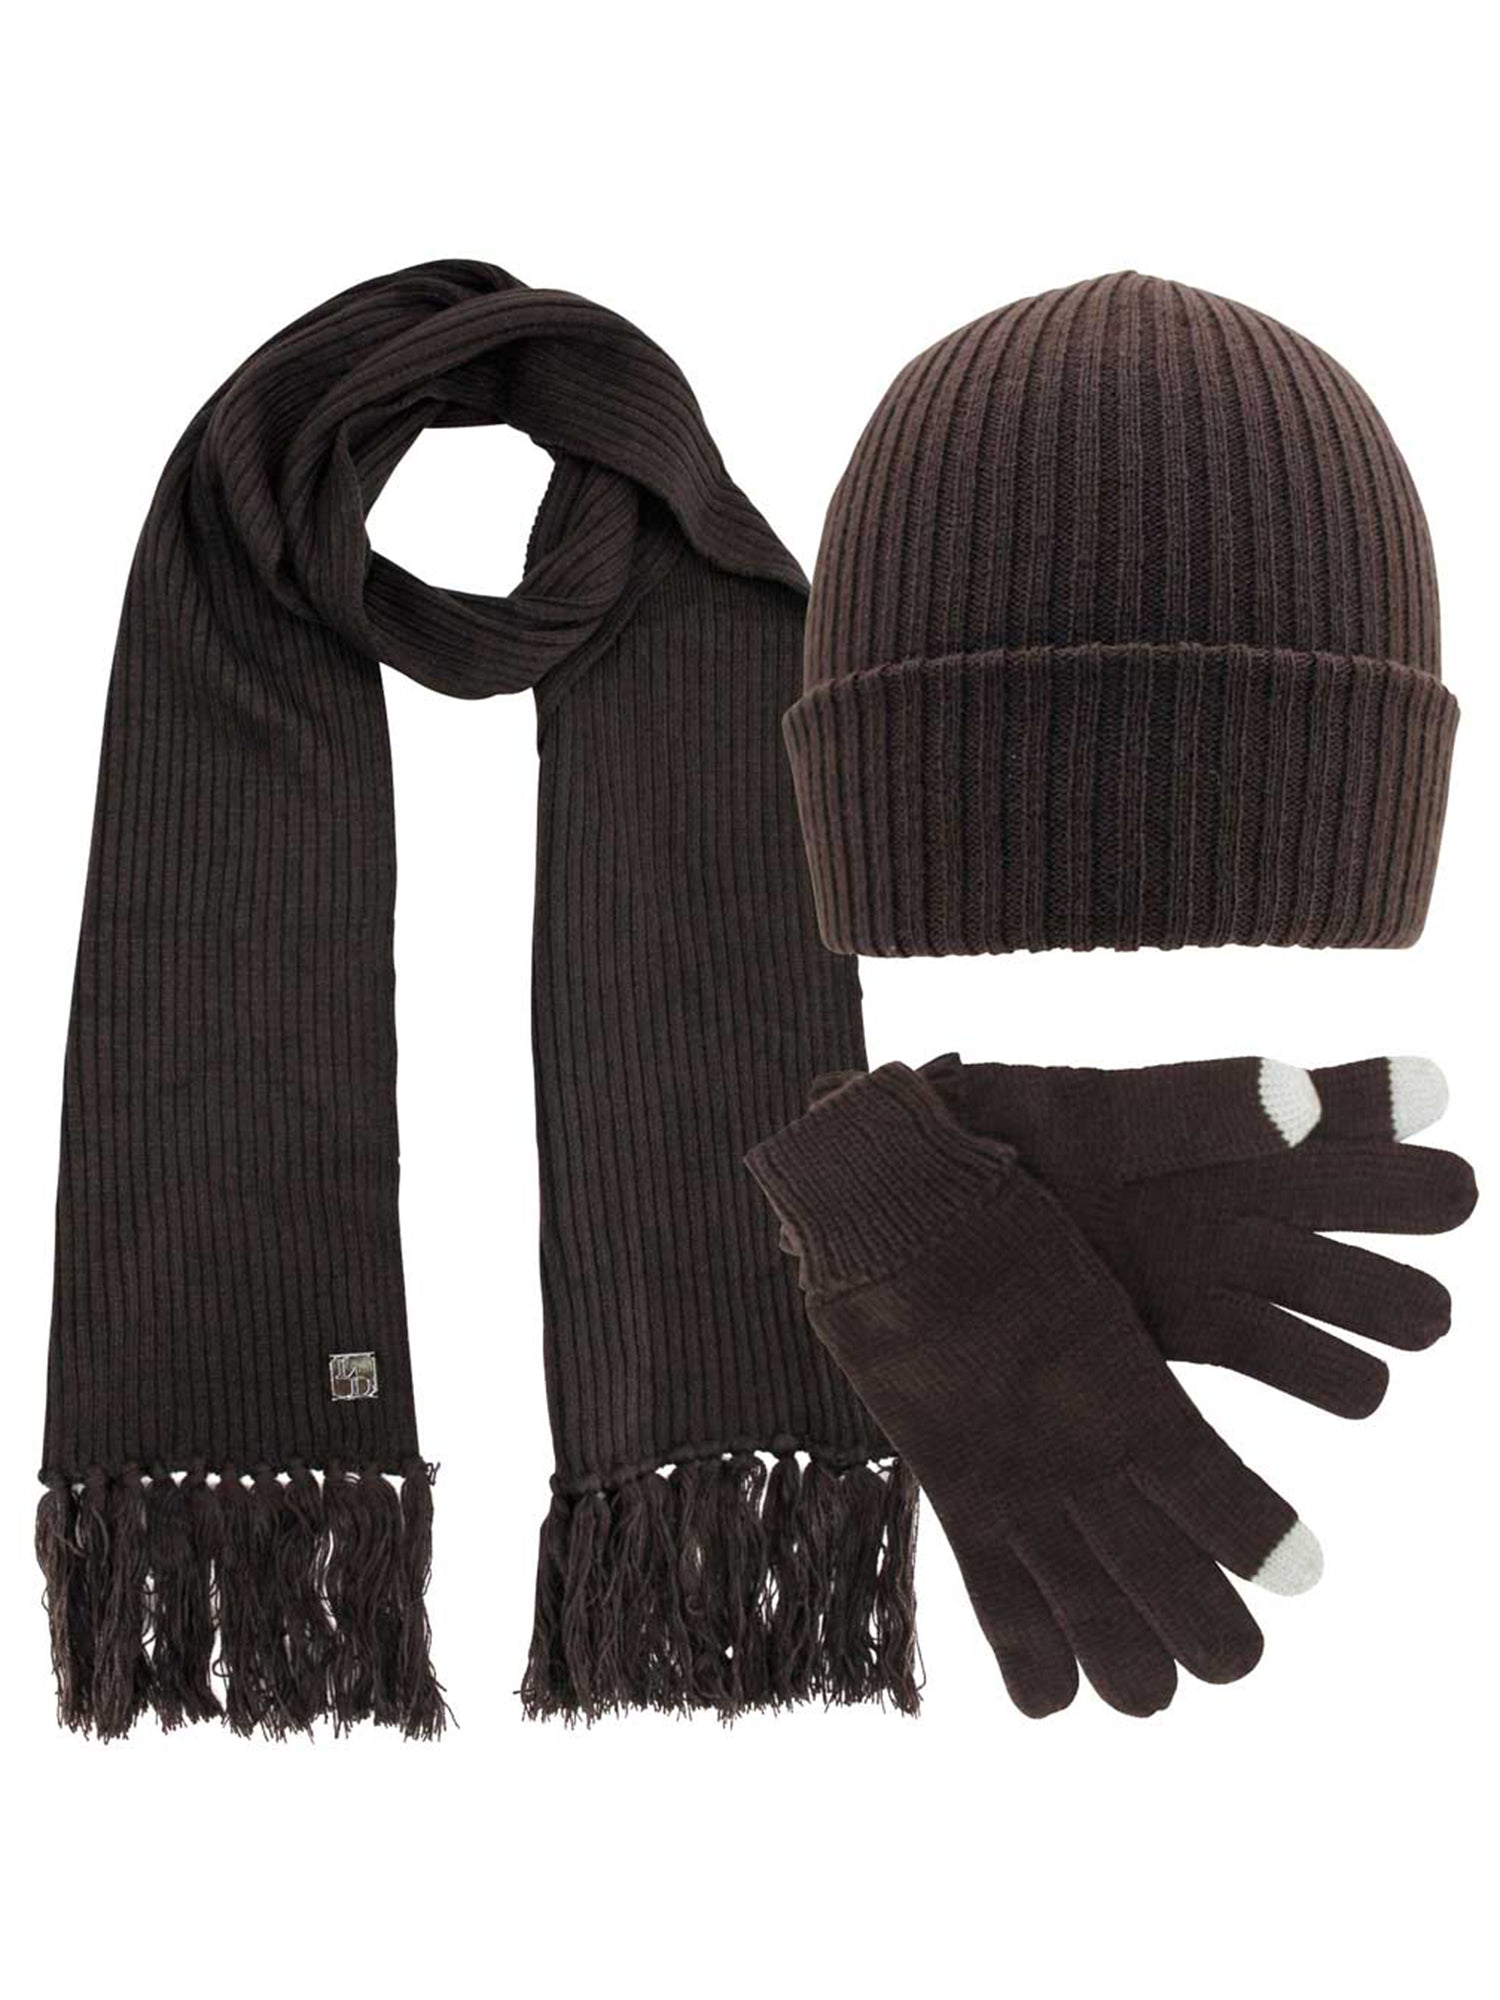 Pin on Hats belts scarves & gloves